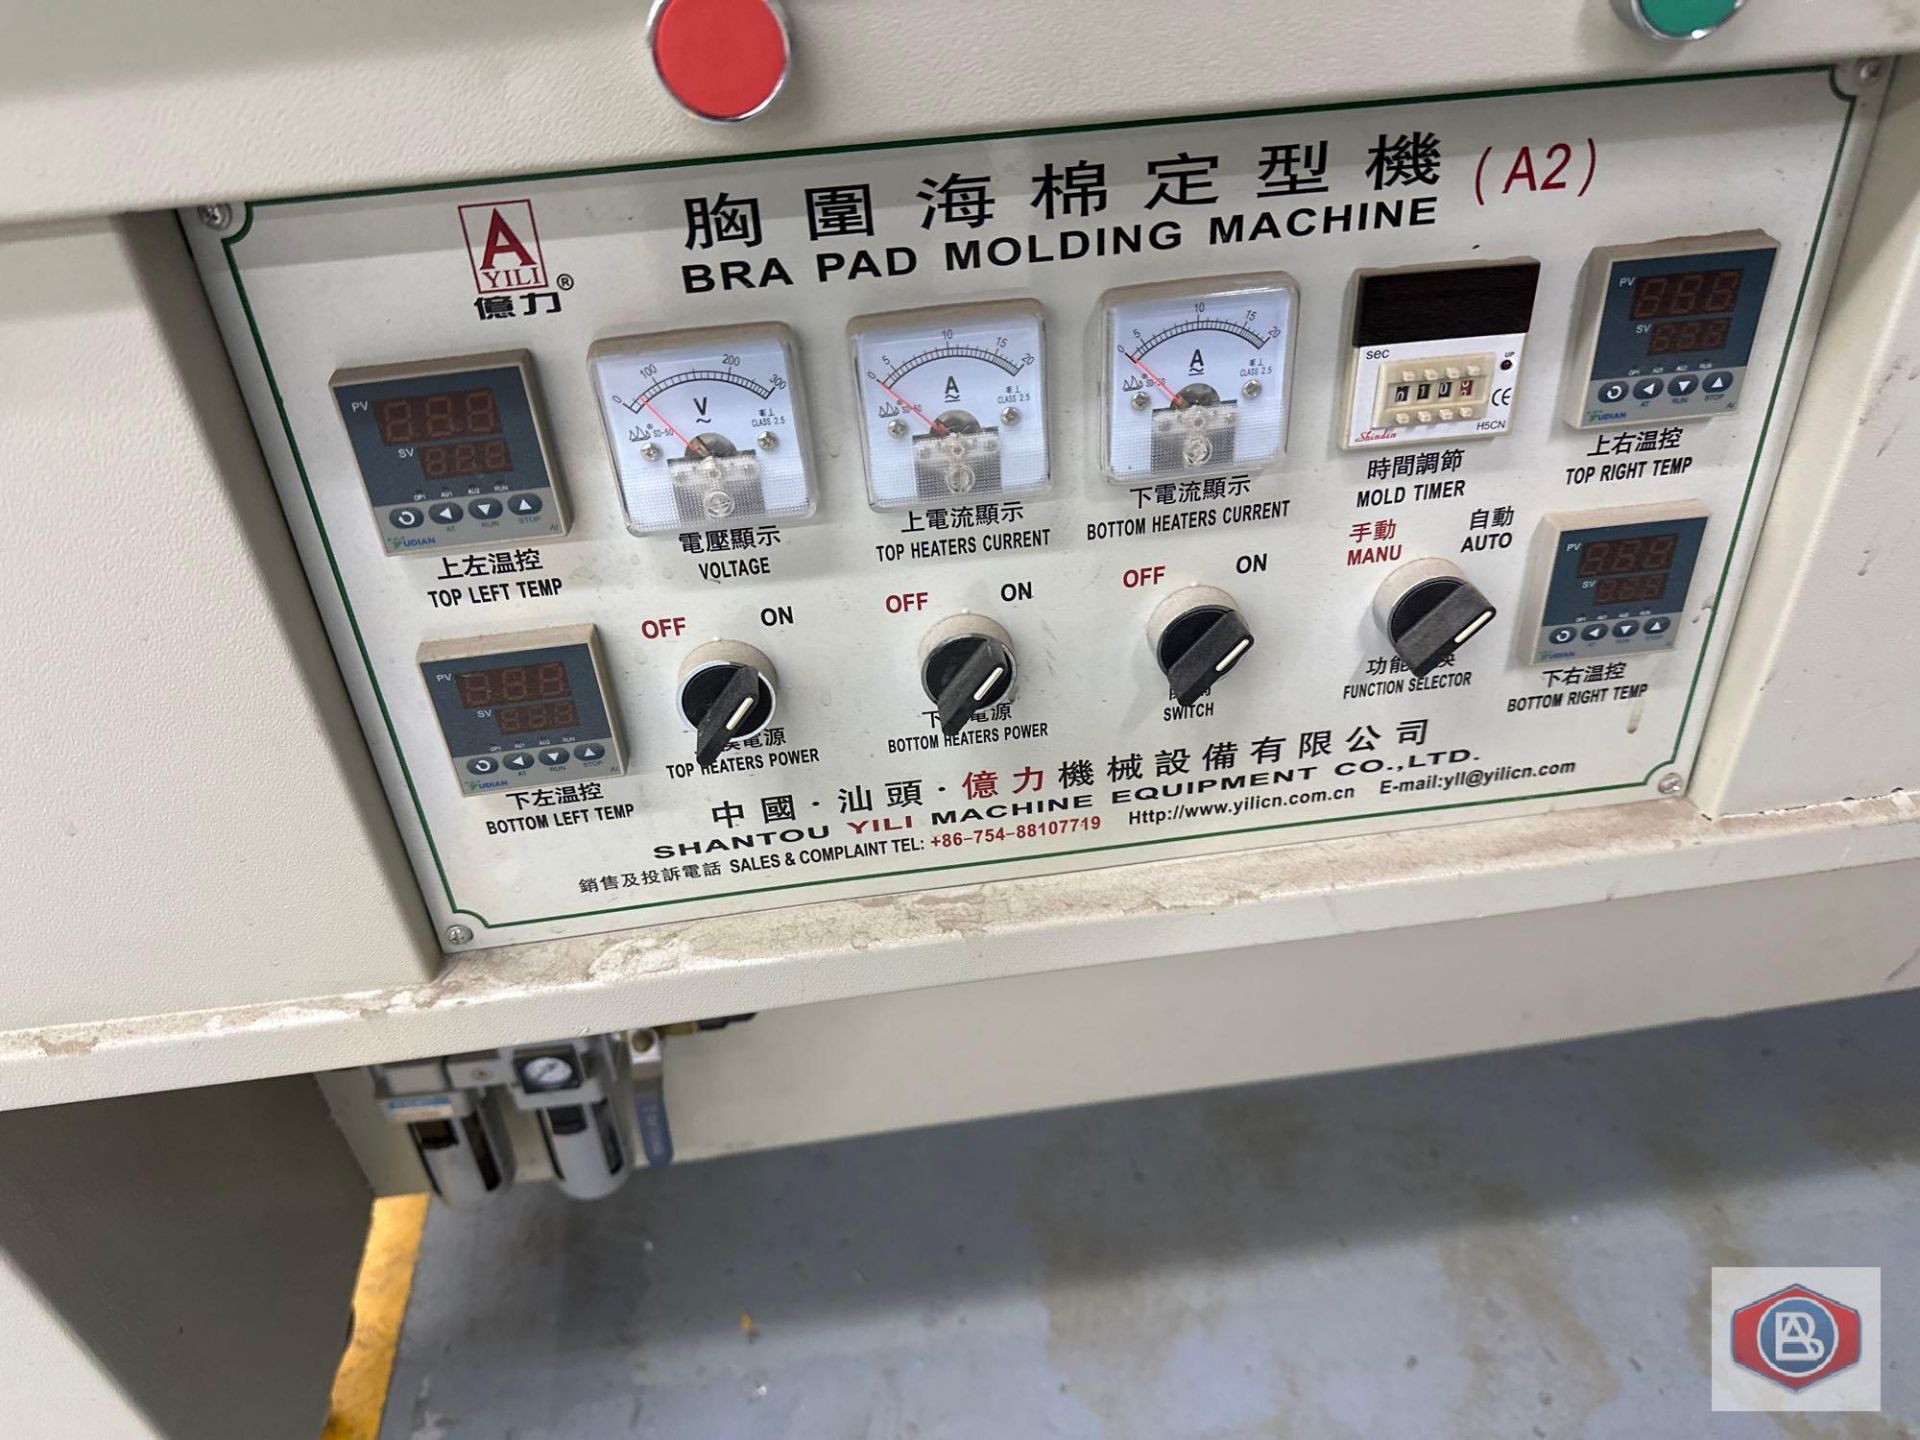 Bra Pad Molding Machine - Image 2 of 3